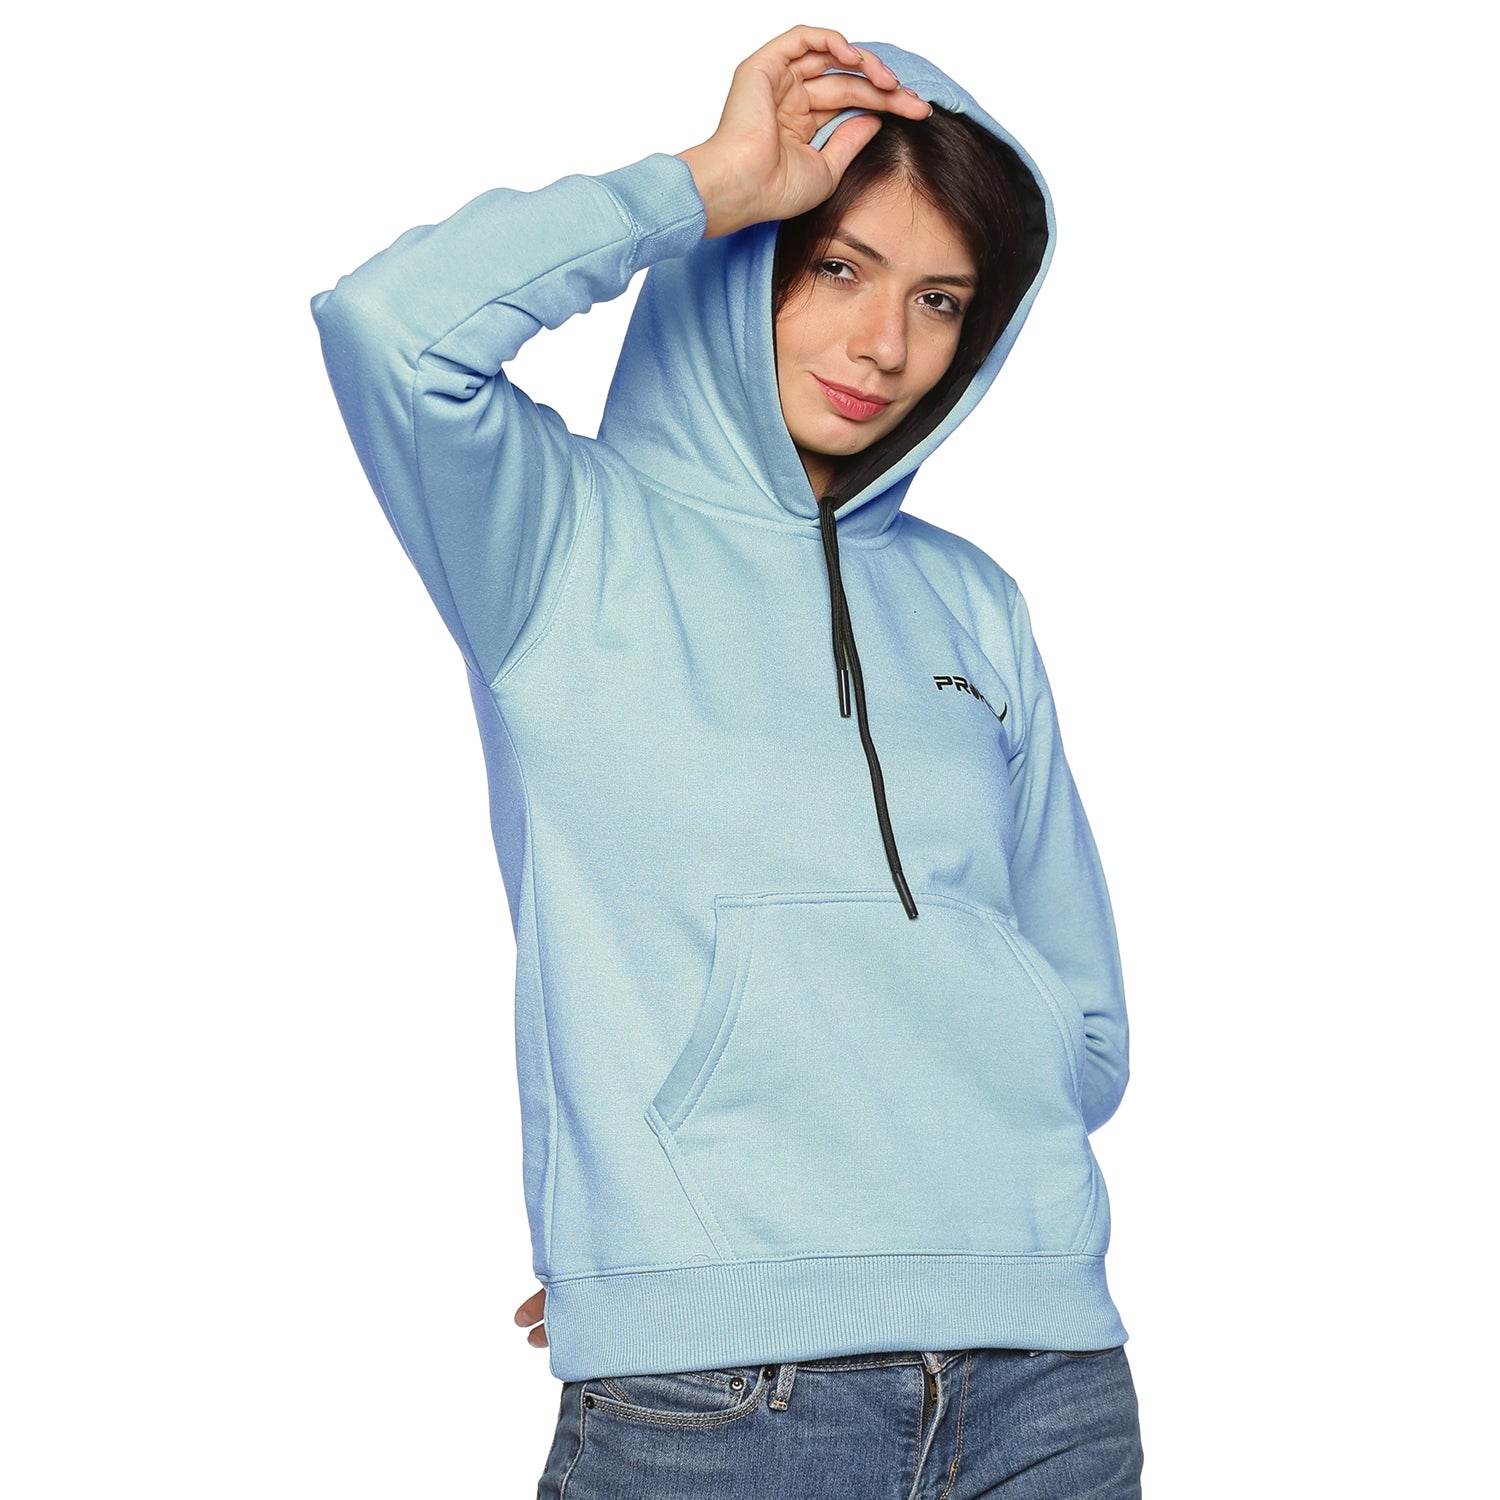 Prokick Sports Women Hooded Sweat Shirt , Sky Blue - Best Price online Prokicksports.com